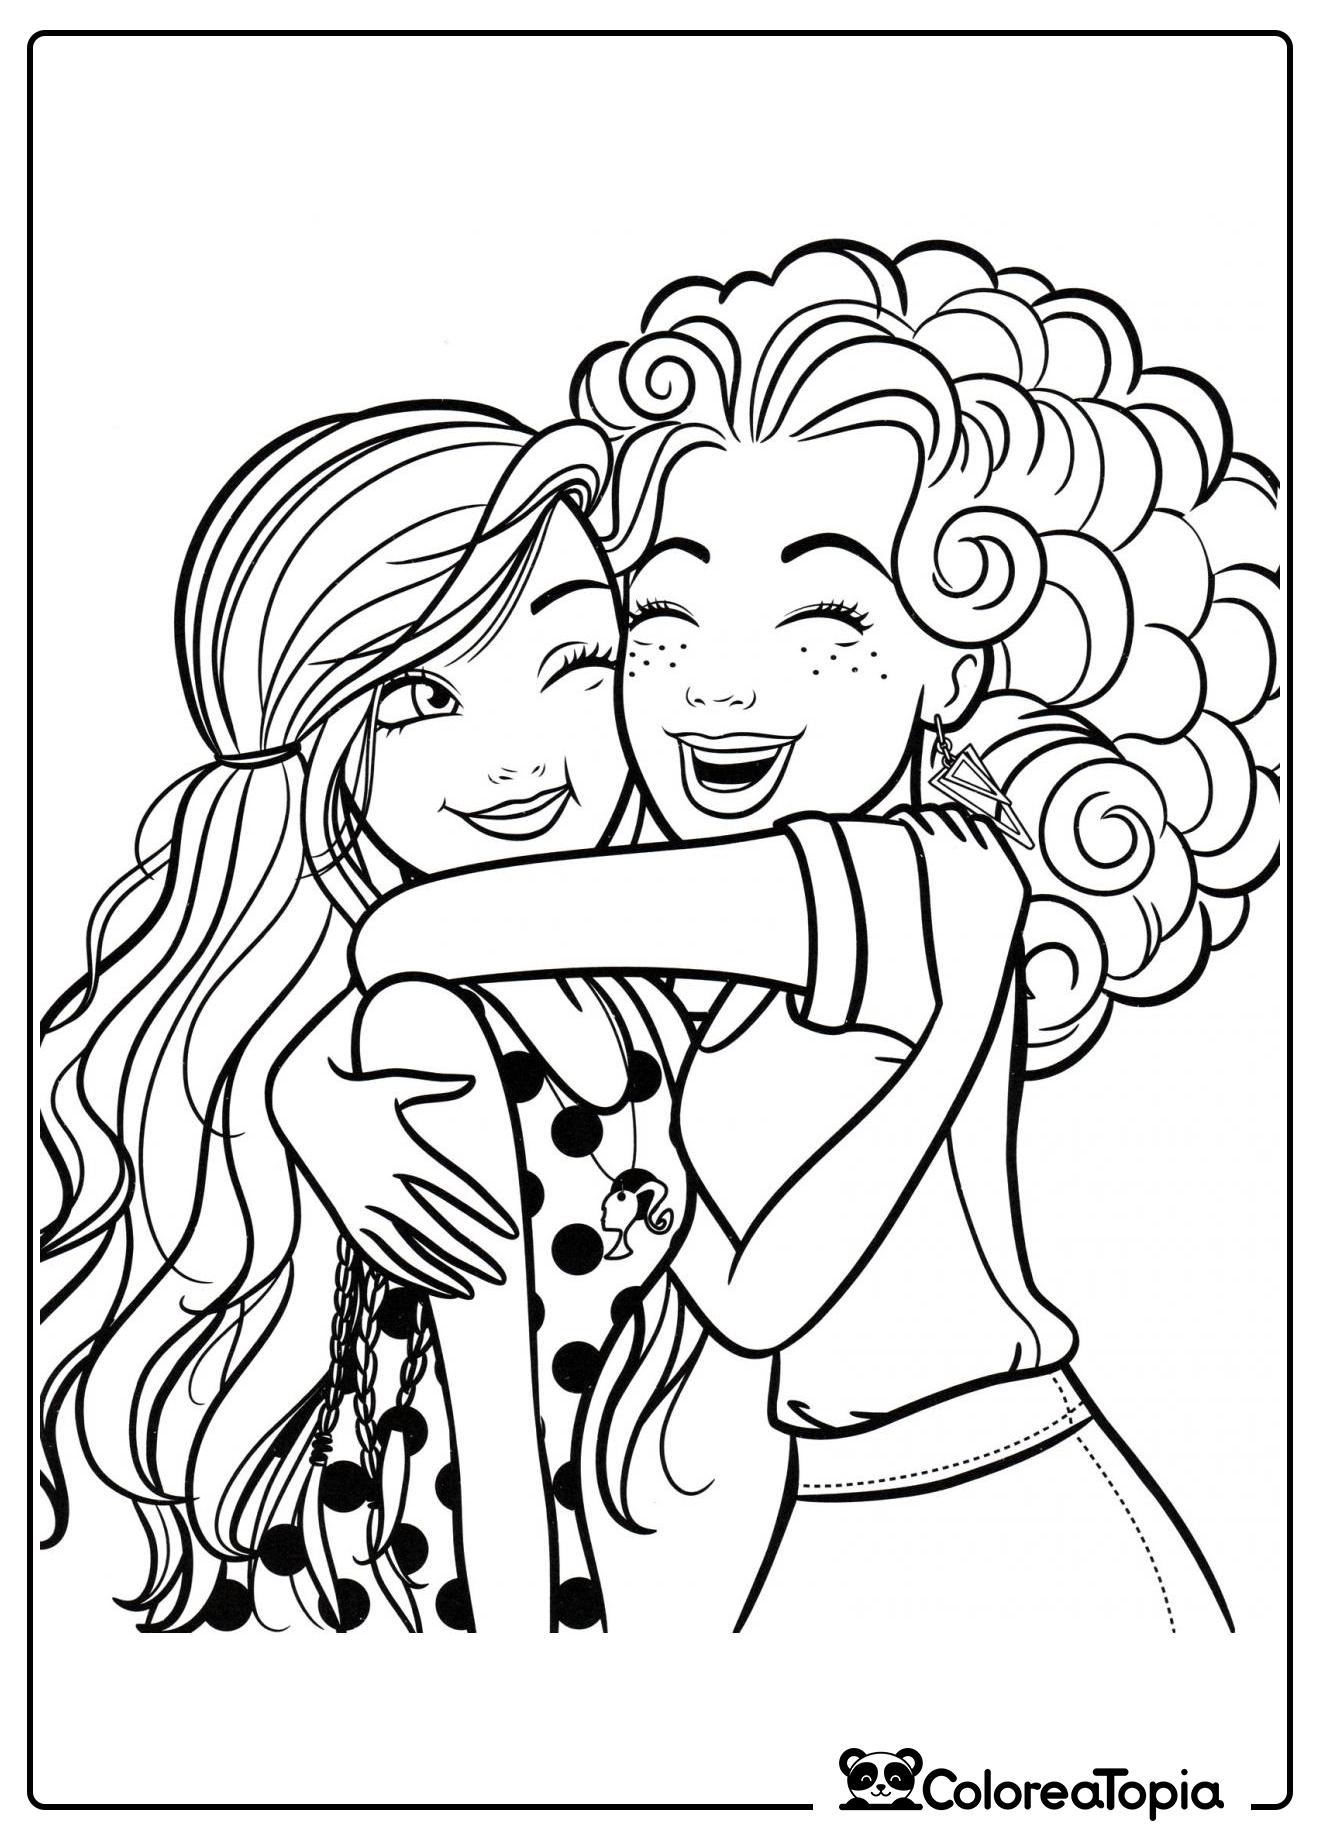 Barbie abraza a su amiga - dibujo para colorear